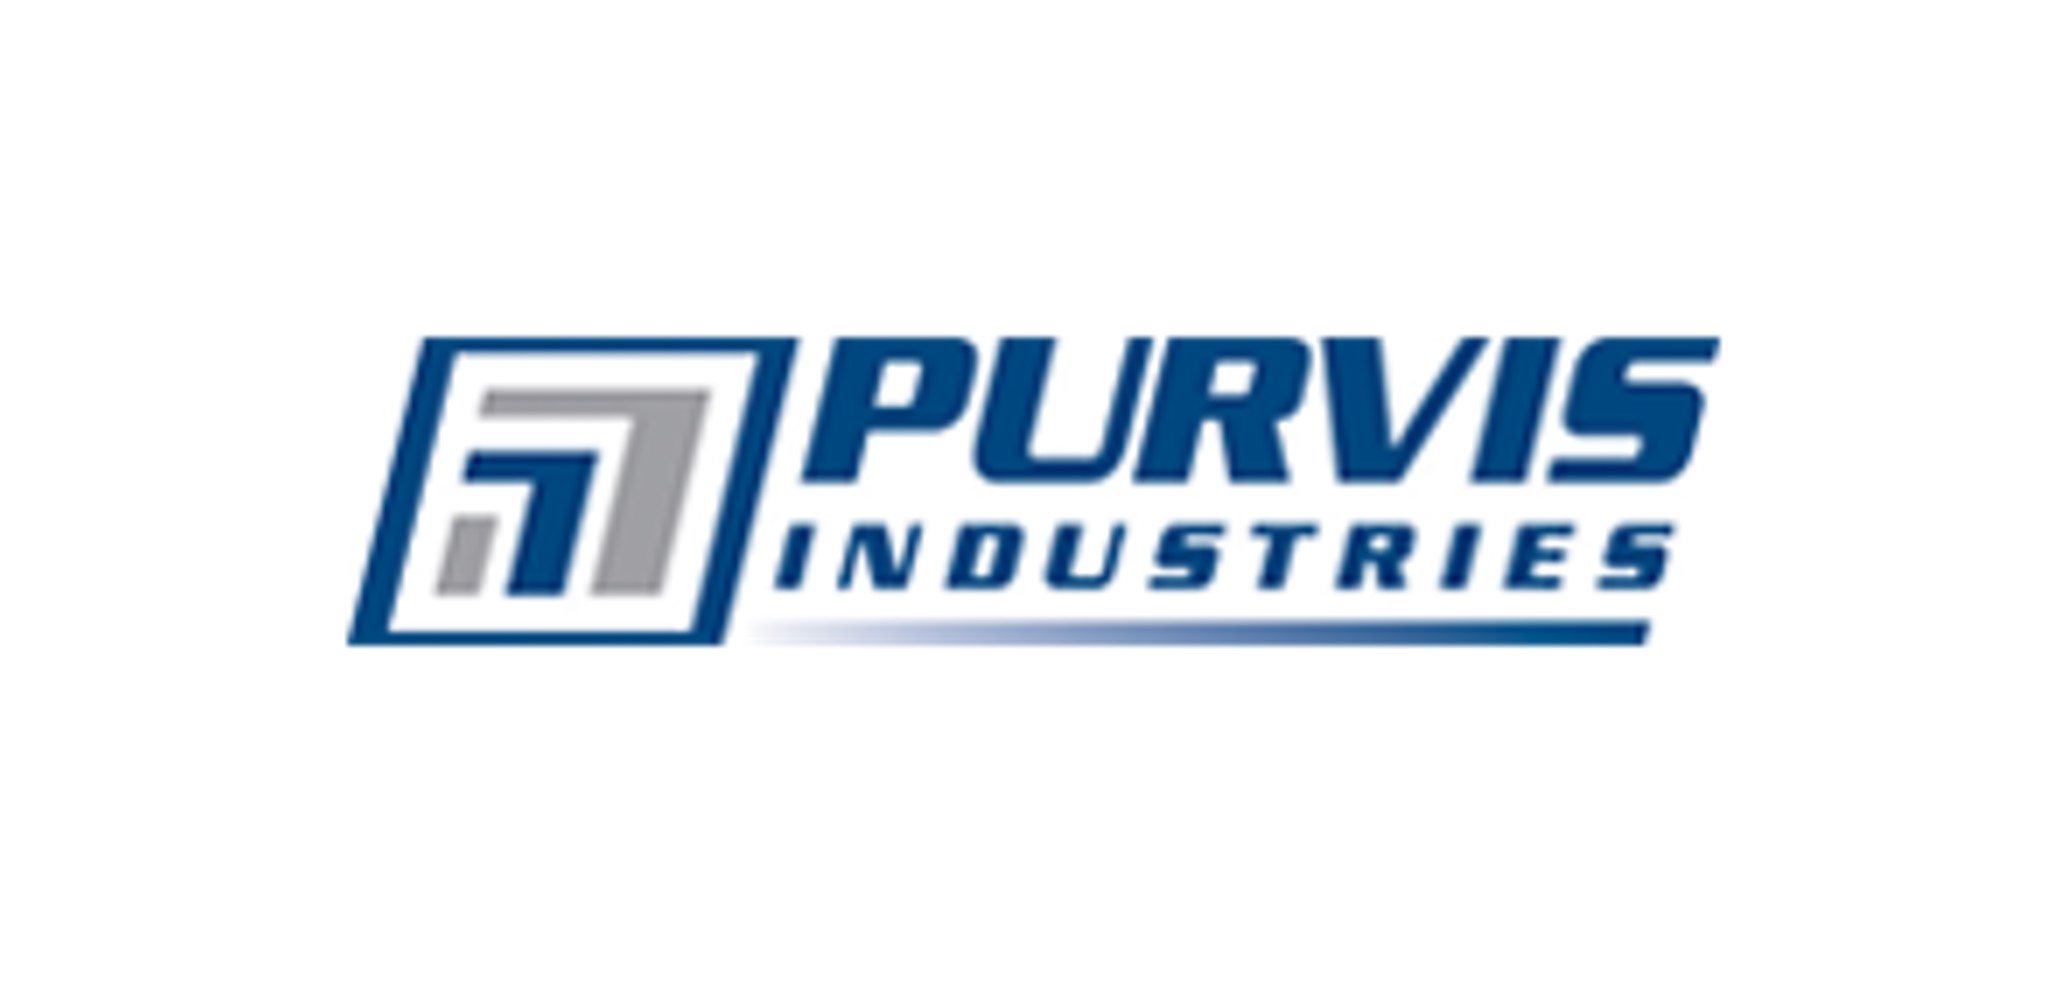 Purvis Industries